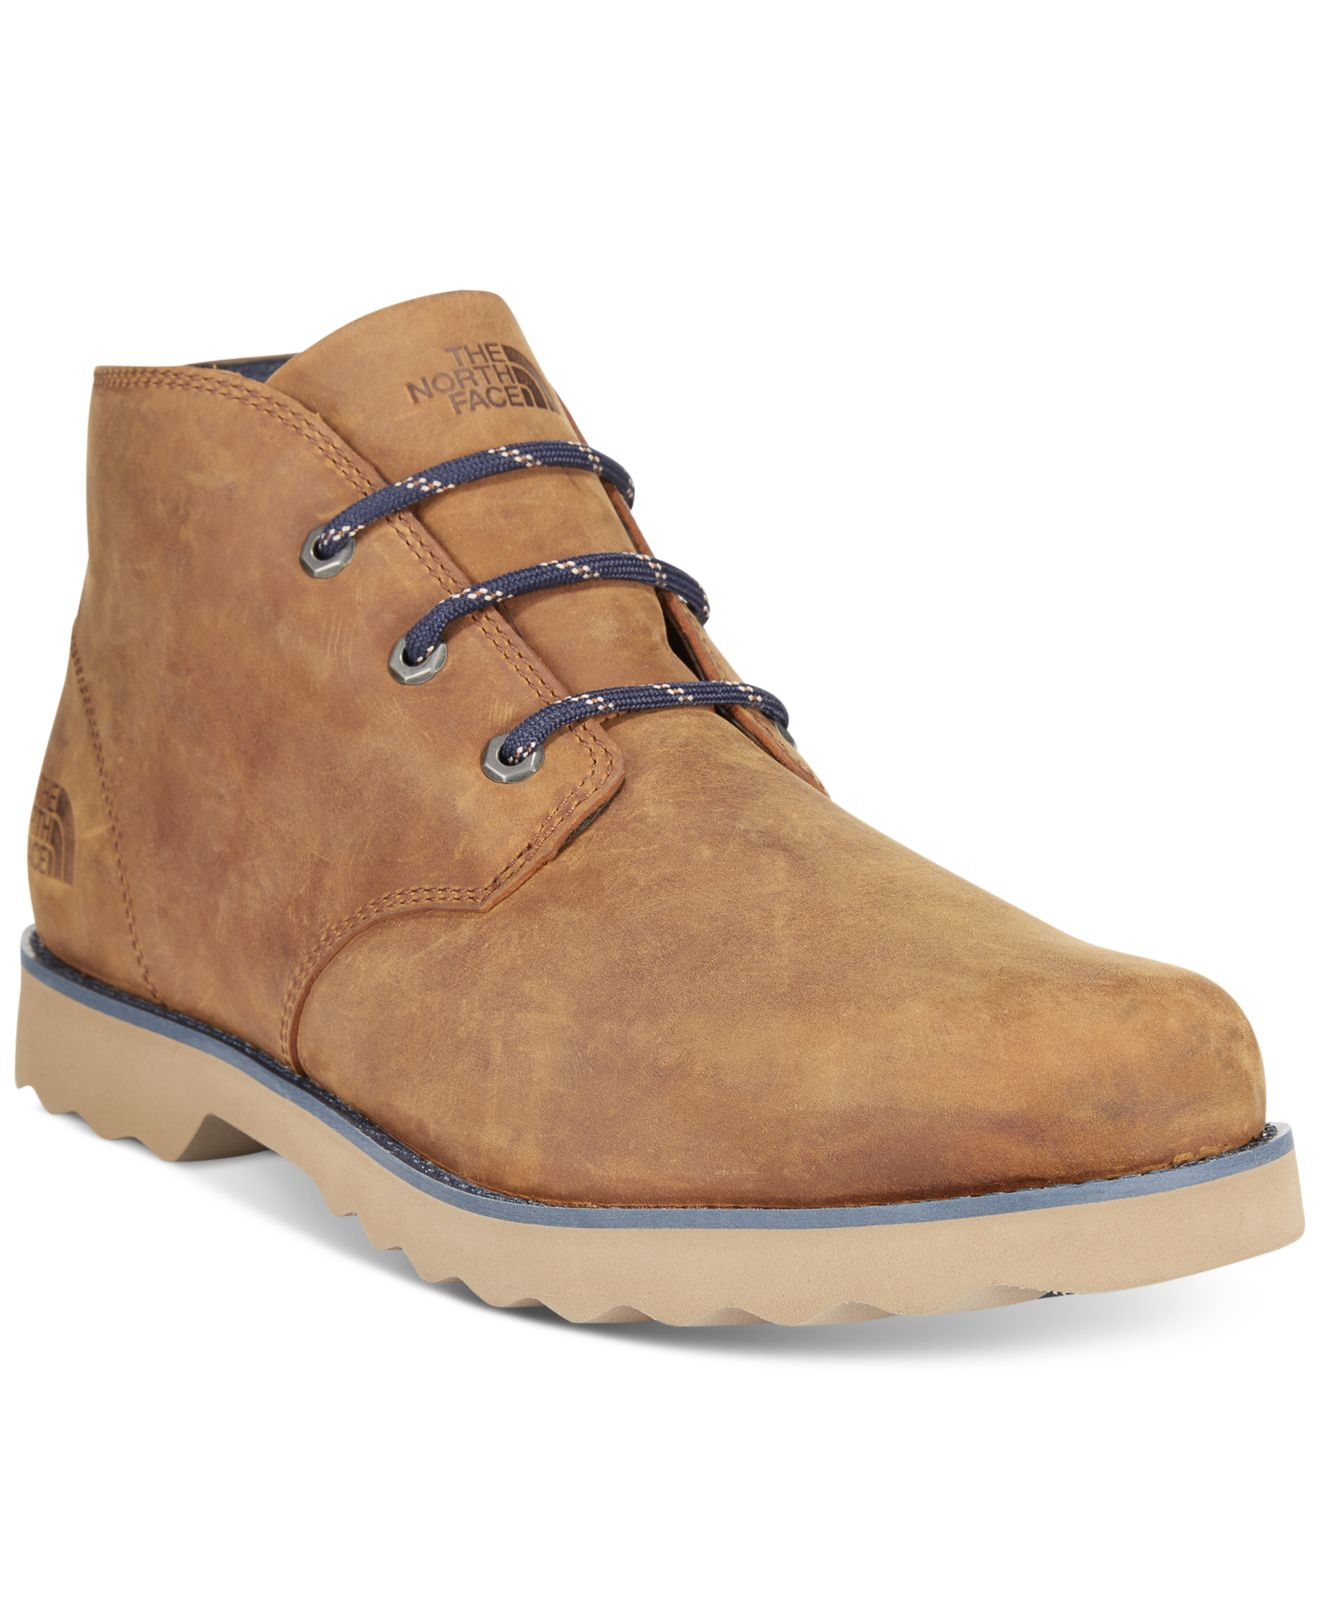 The North Face Ballard Ii Chukka Boots in Brown for Men - Lyst